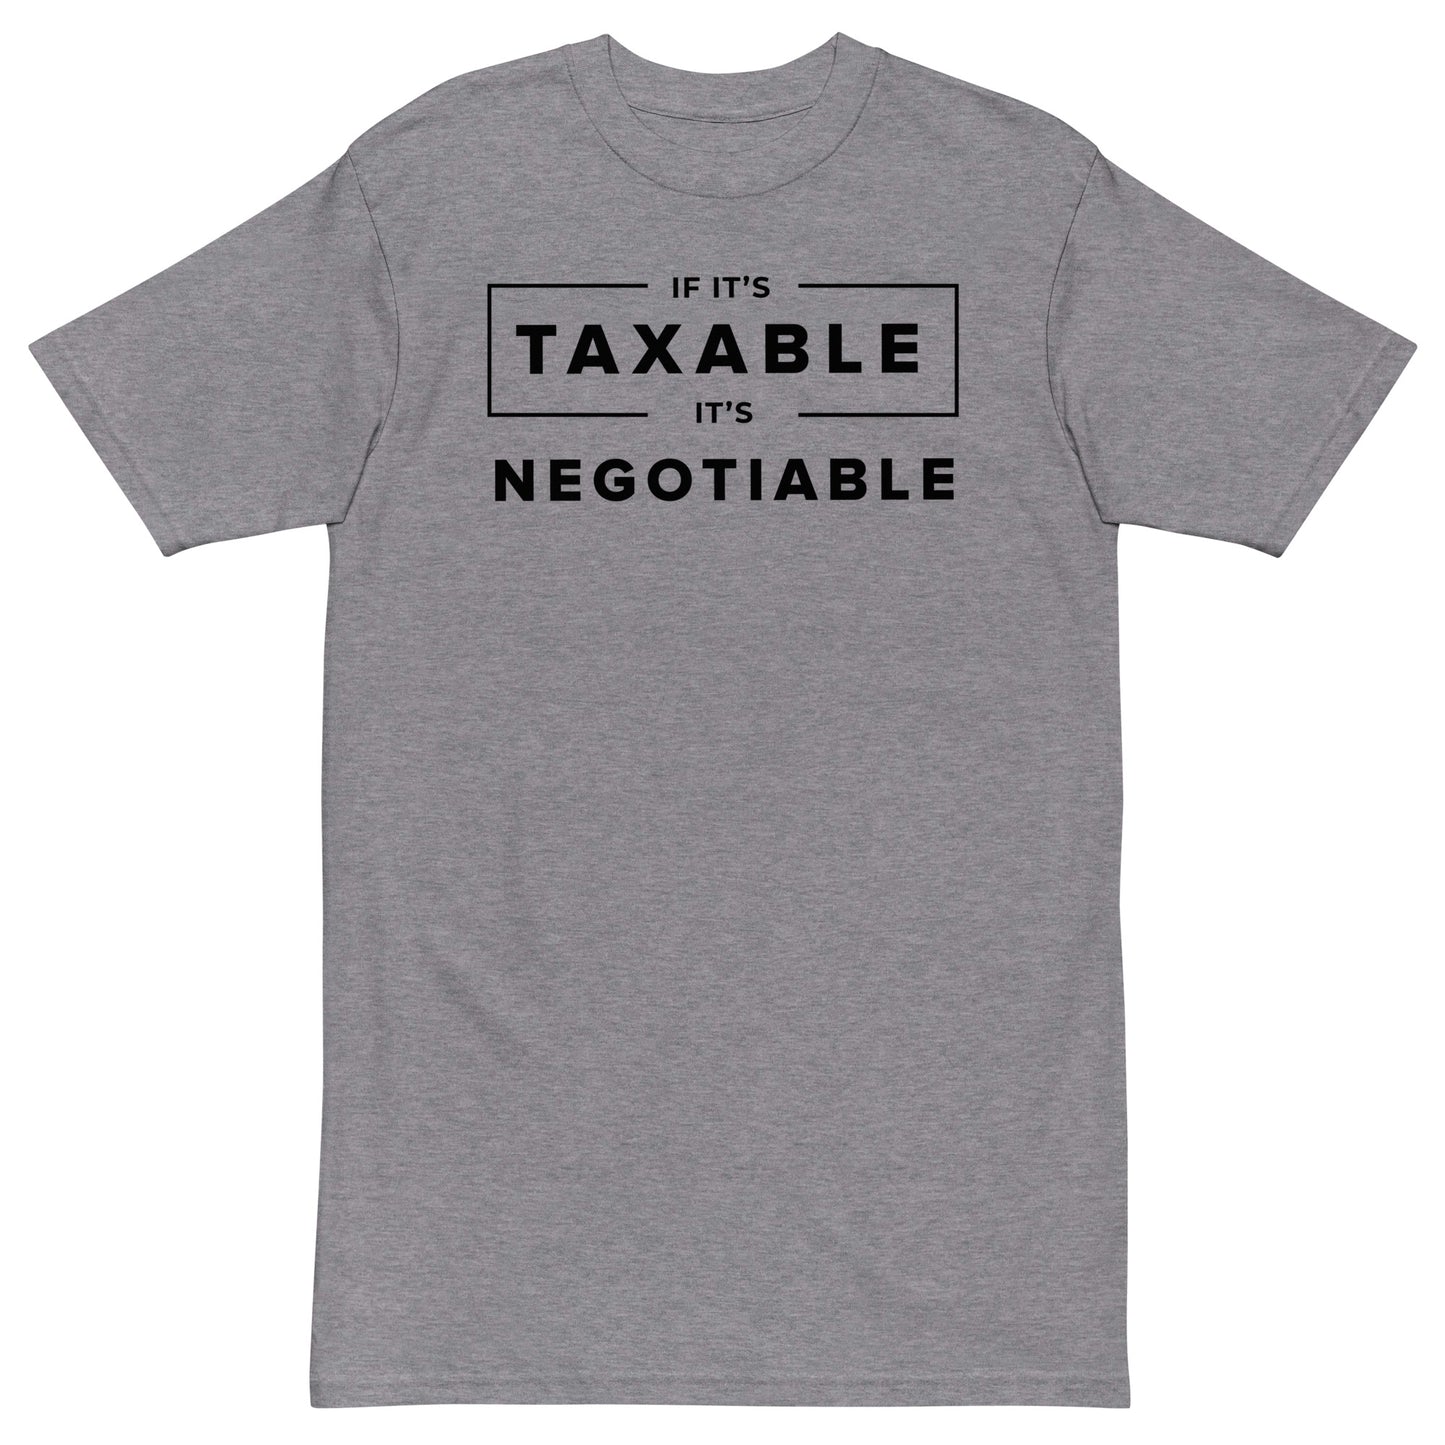 If it's taxable, it's negotiable - original - dark